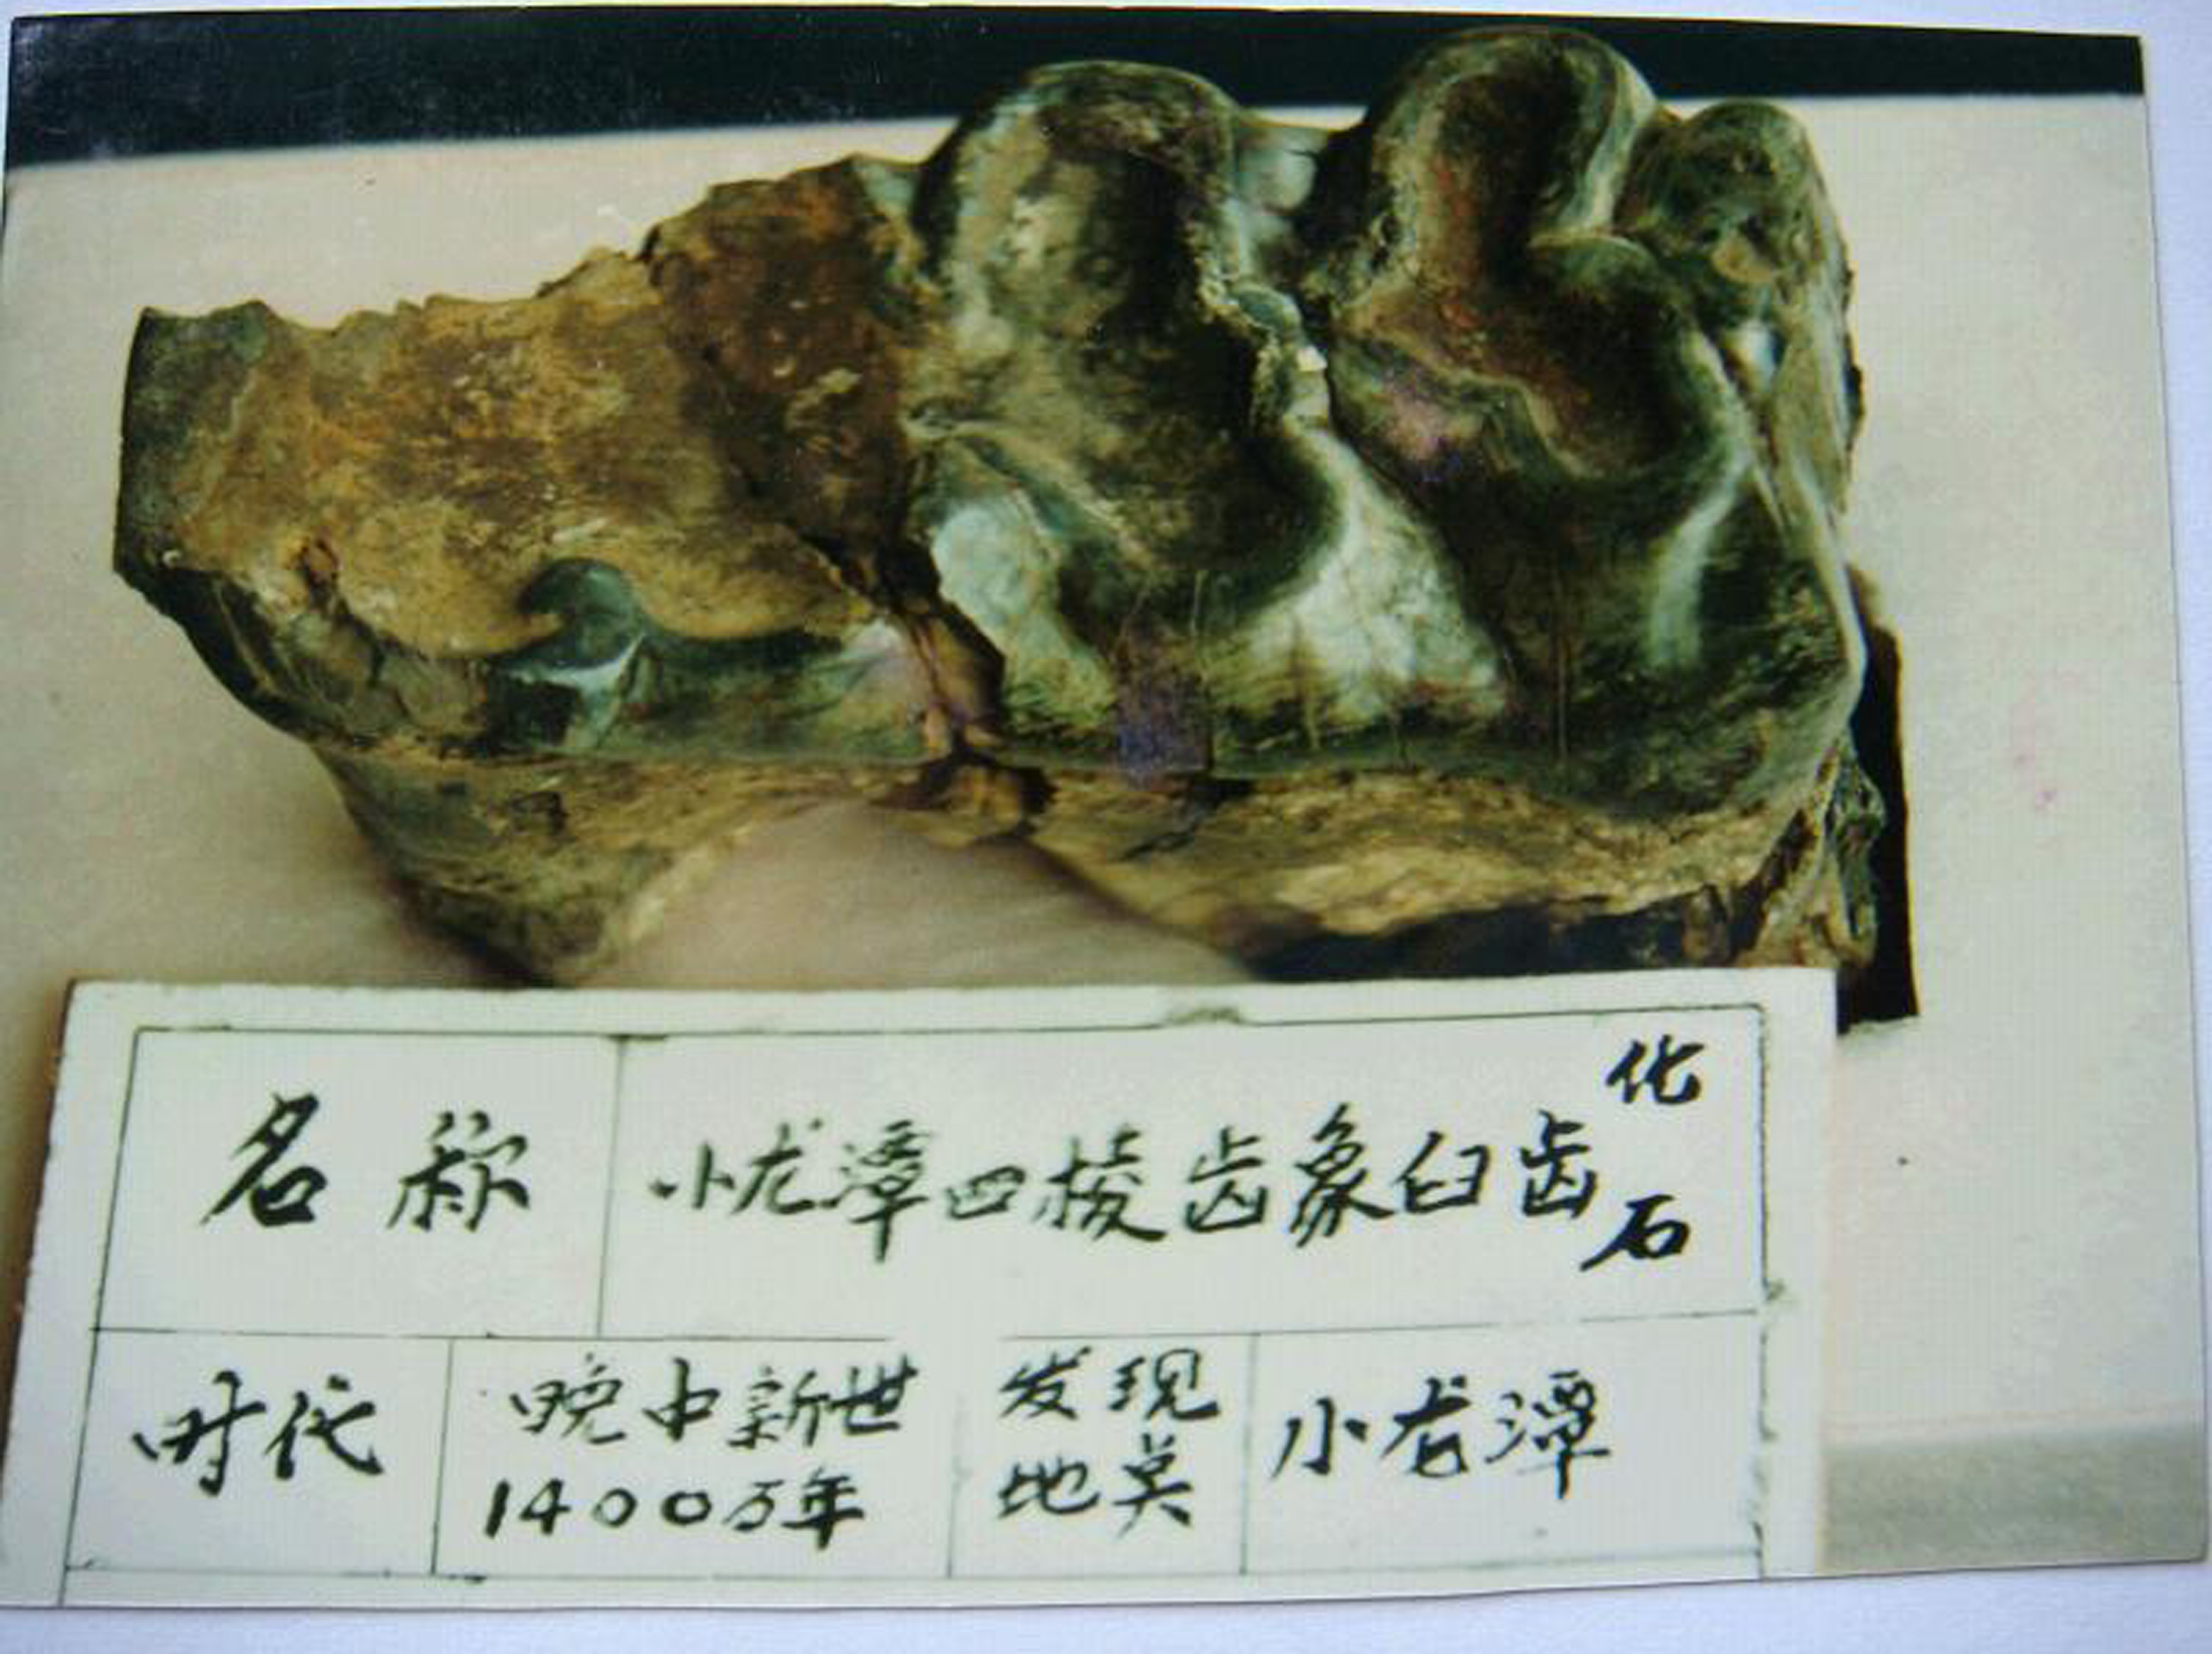 臼齒化石